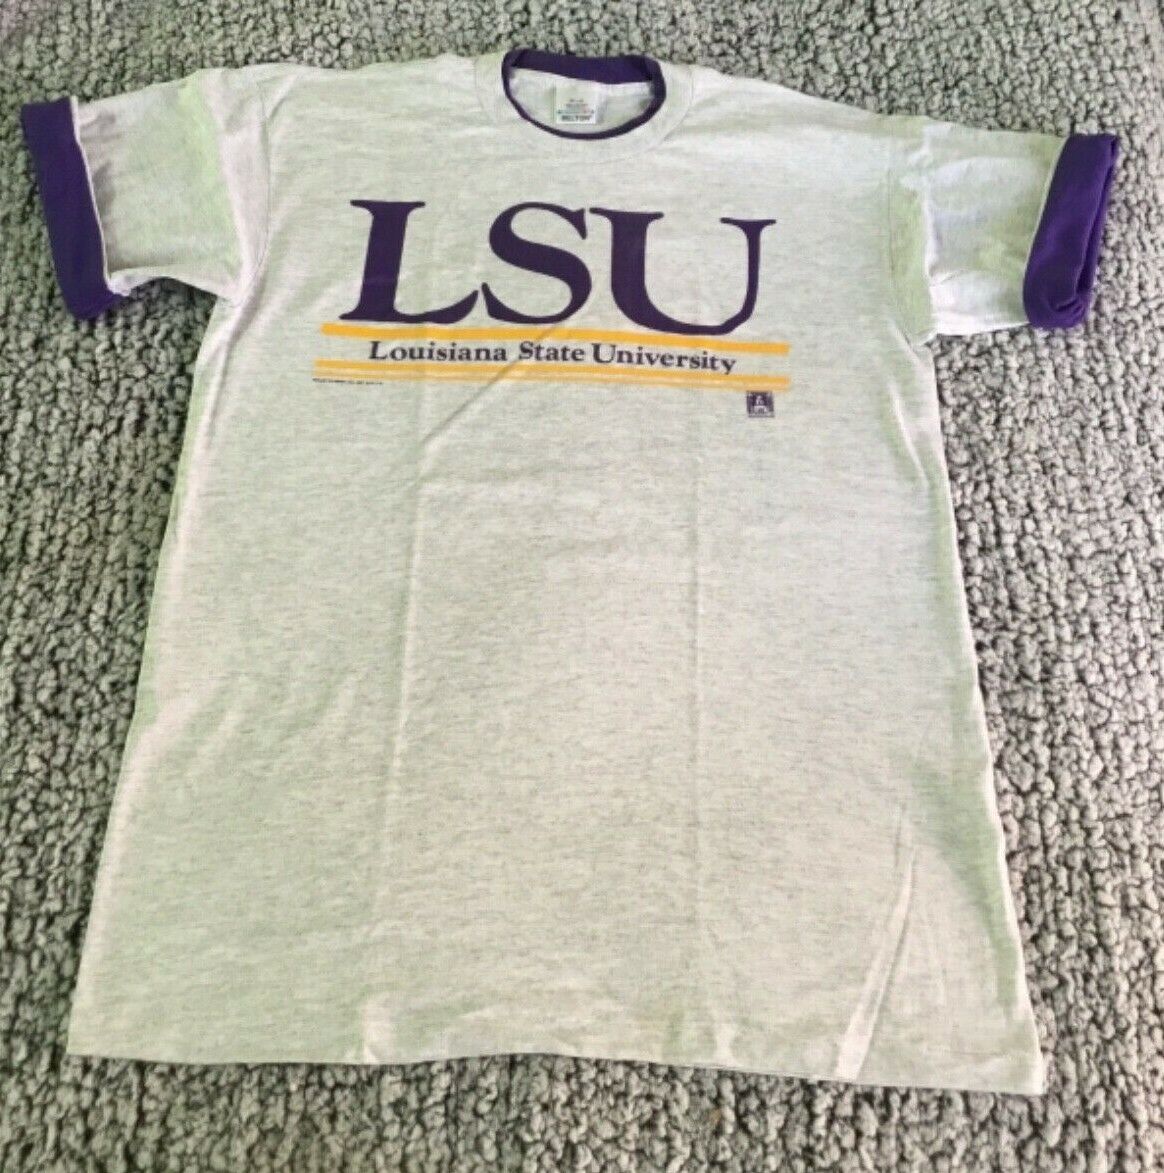 NWOT Vintage LSU Louisiana State University Tigers T-Shirt Size Large